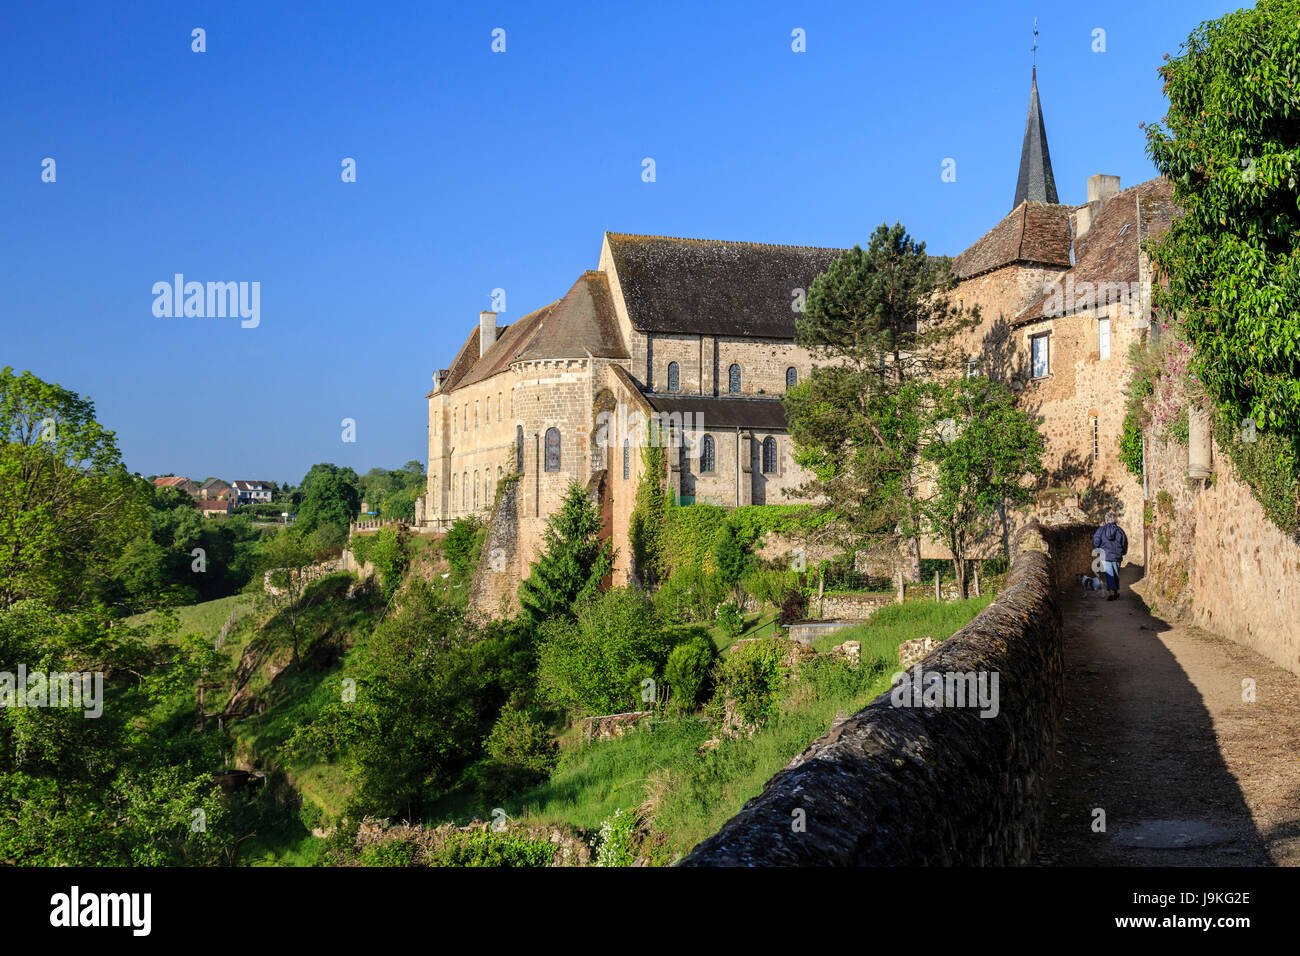 Frankreich, Indre, Saint Benoît du Sault, beschriftet Les Plus beaux villages de France (Schönste Dörfer Frankreichs), die Kirche und Pfad Stockfoto